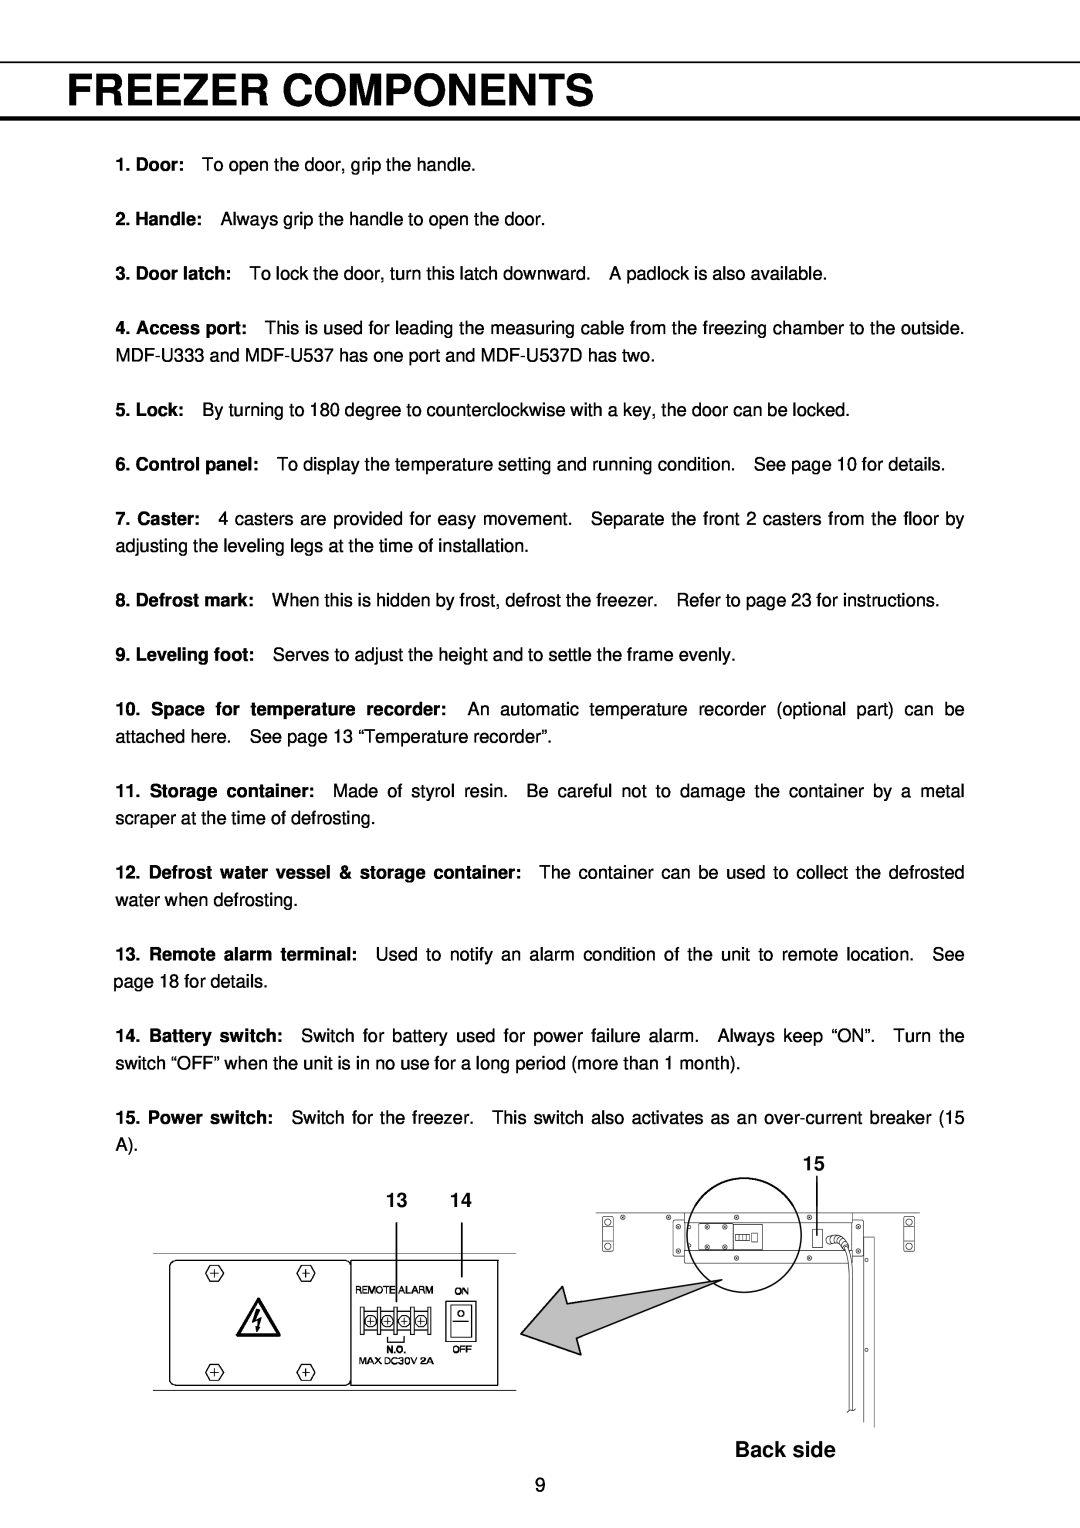 Sanyo MDF-U537, MDF-U333 instruction manual Freezer Components, Back side 